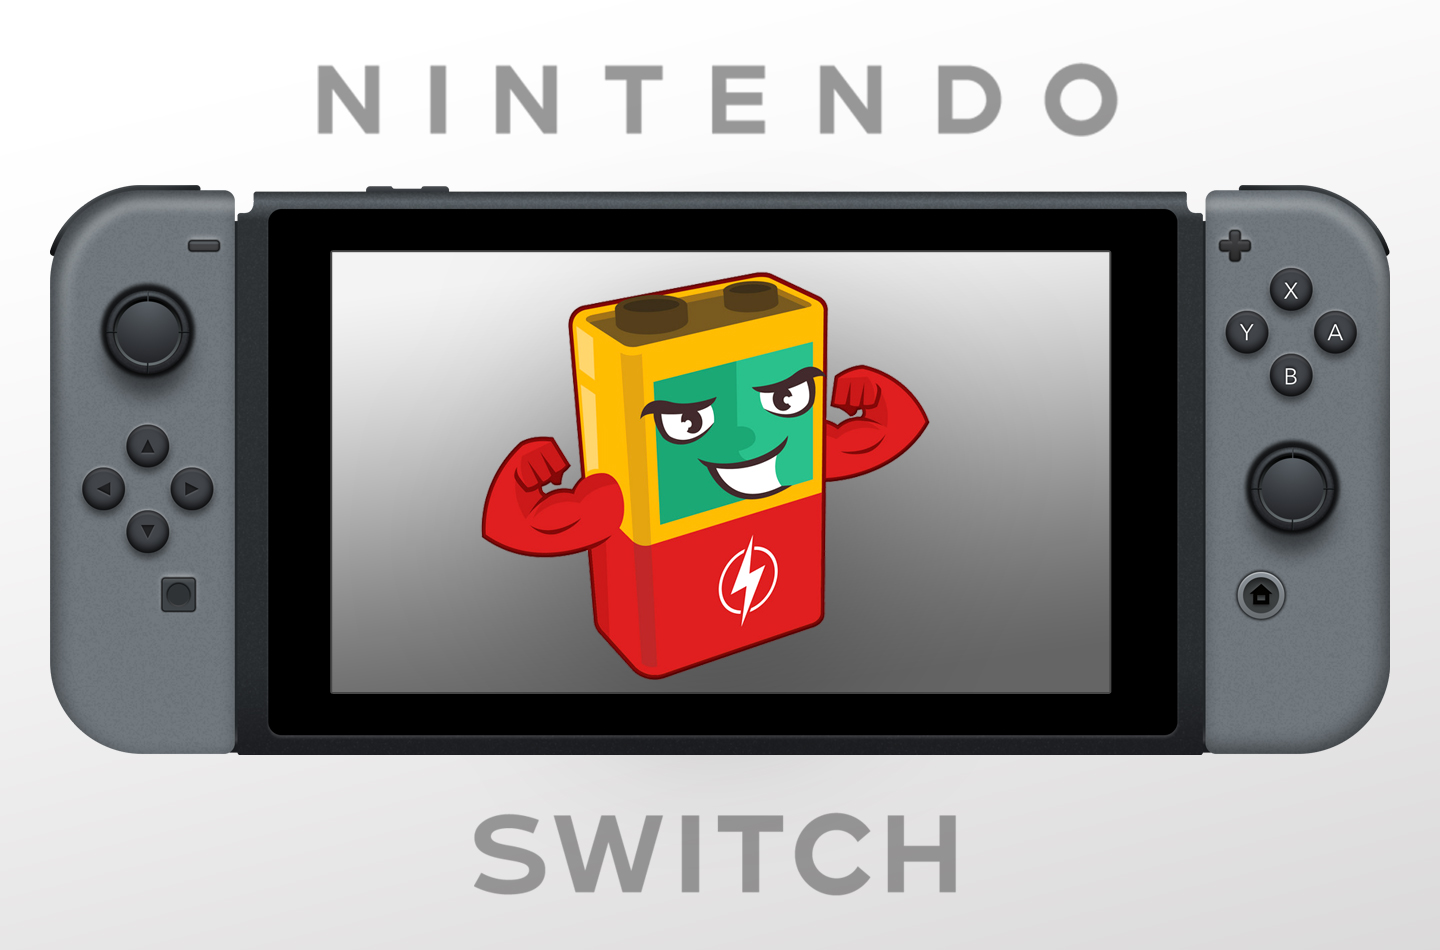 iets Lionel Green Street hop Nintendo Switch: Nieuwe model laat je langer spelletjes spelen |  LetsGoDigital